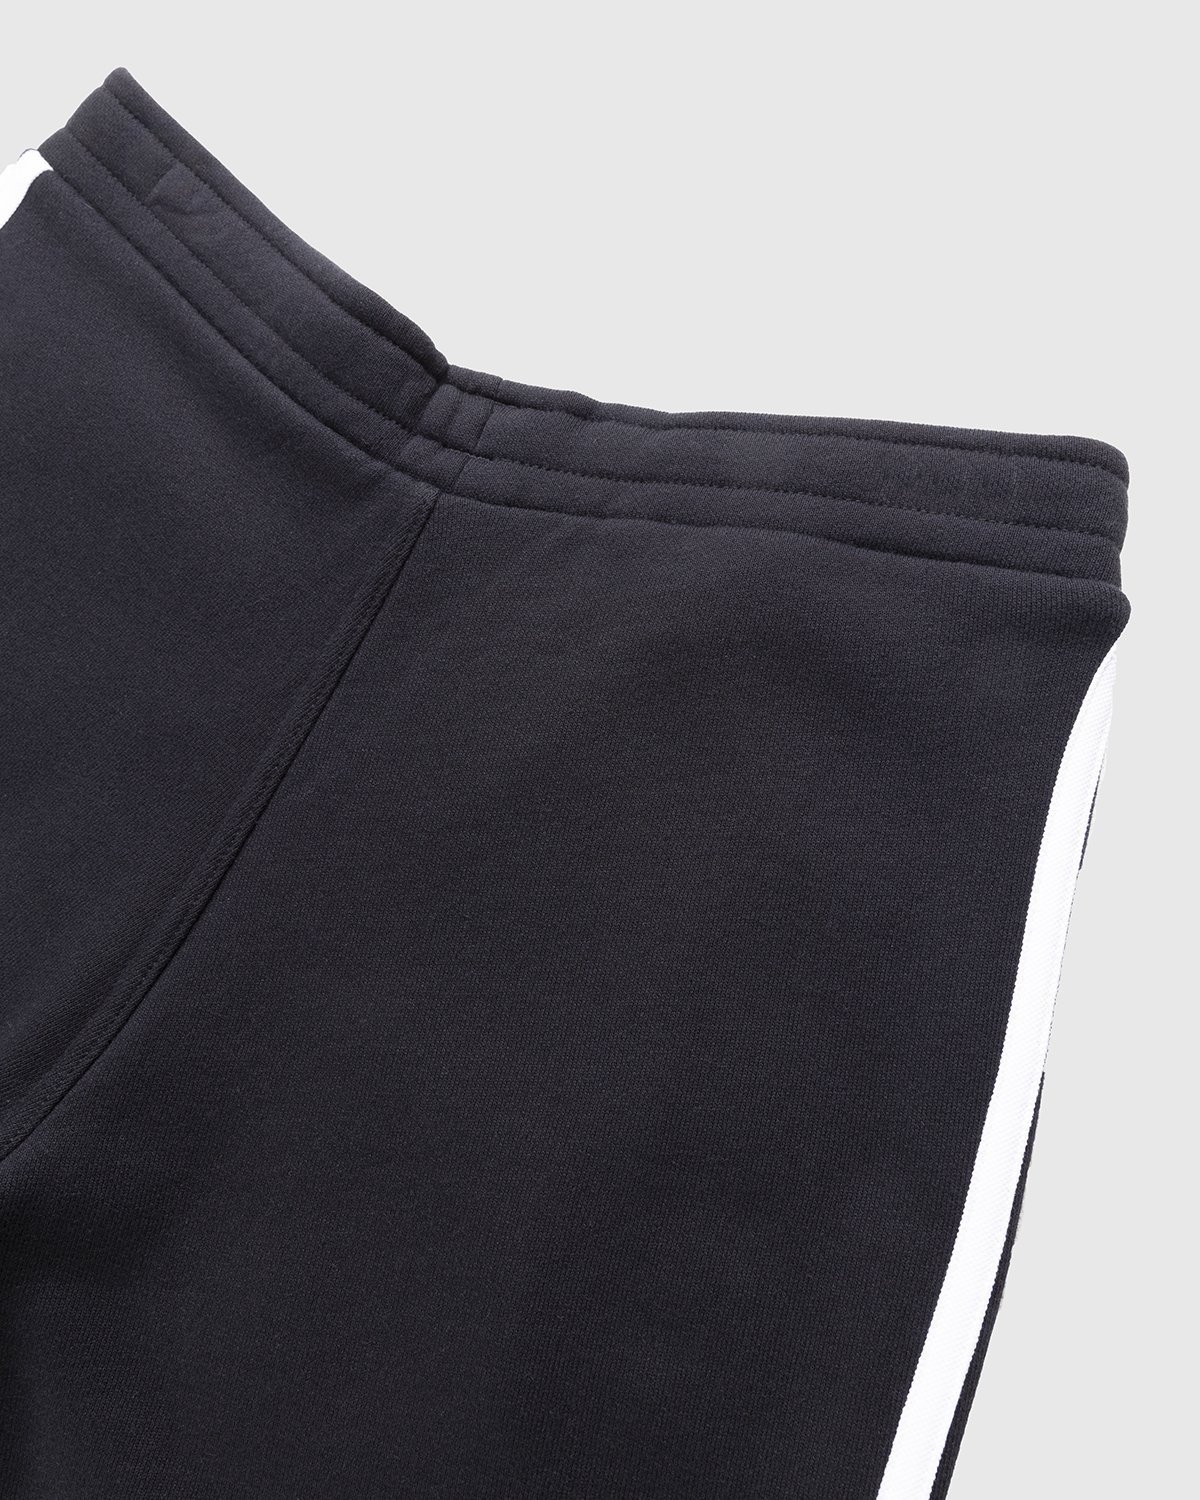 Adidas – 3 Stripe Short Black - Sweatshorts - Black - Image 5